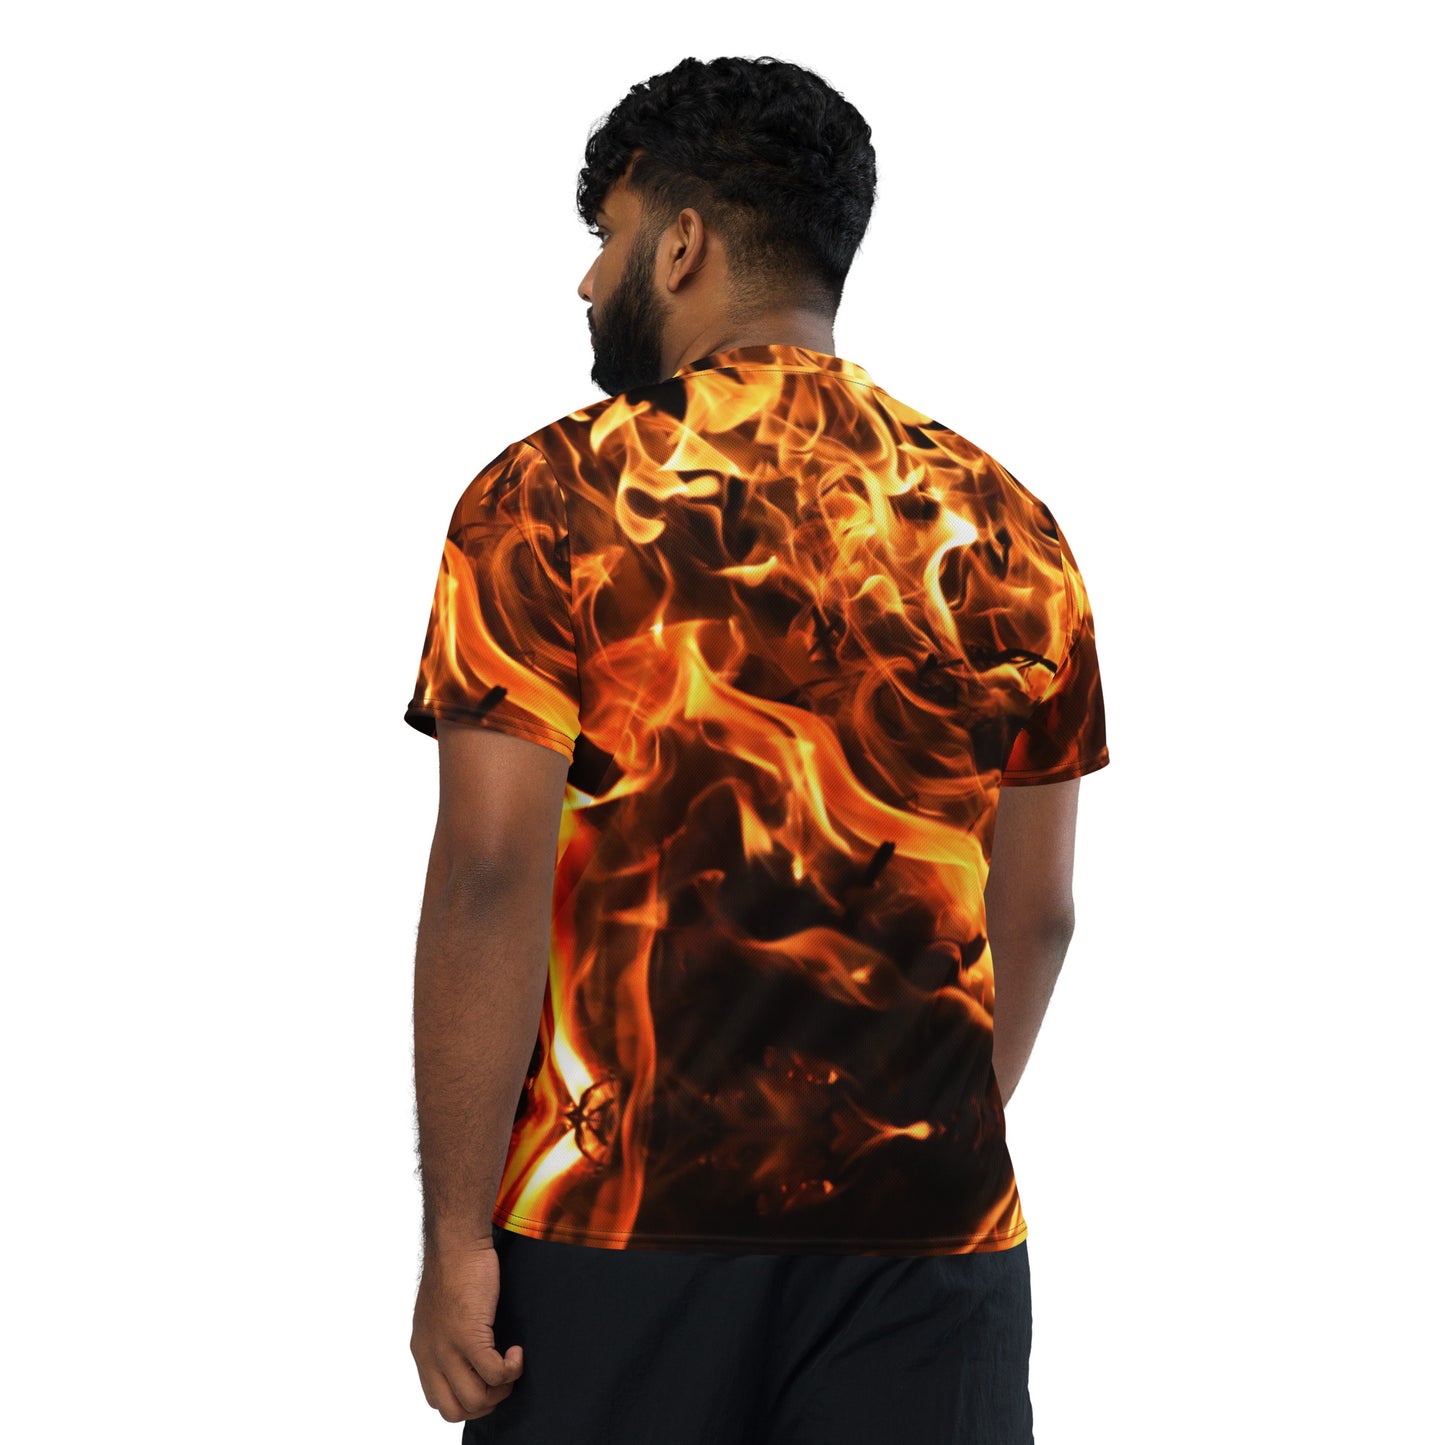 Fire Spirits Unisex Sports Jersey - "On Fire"